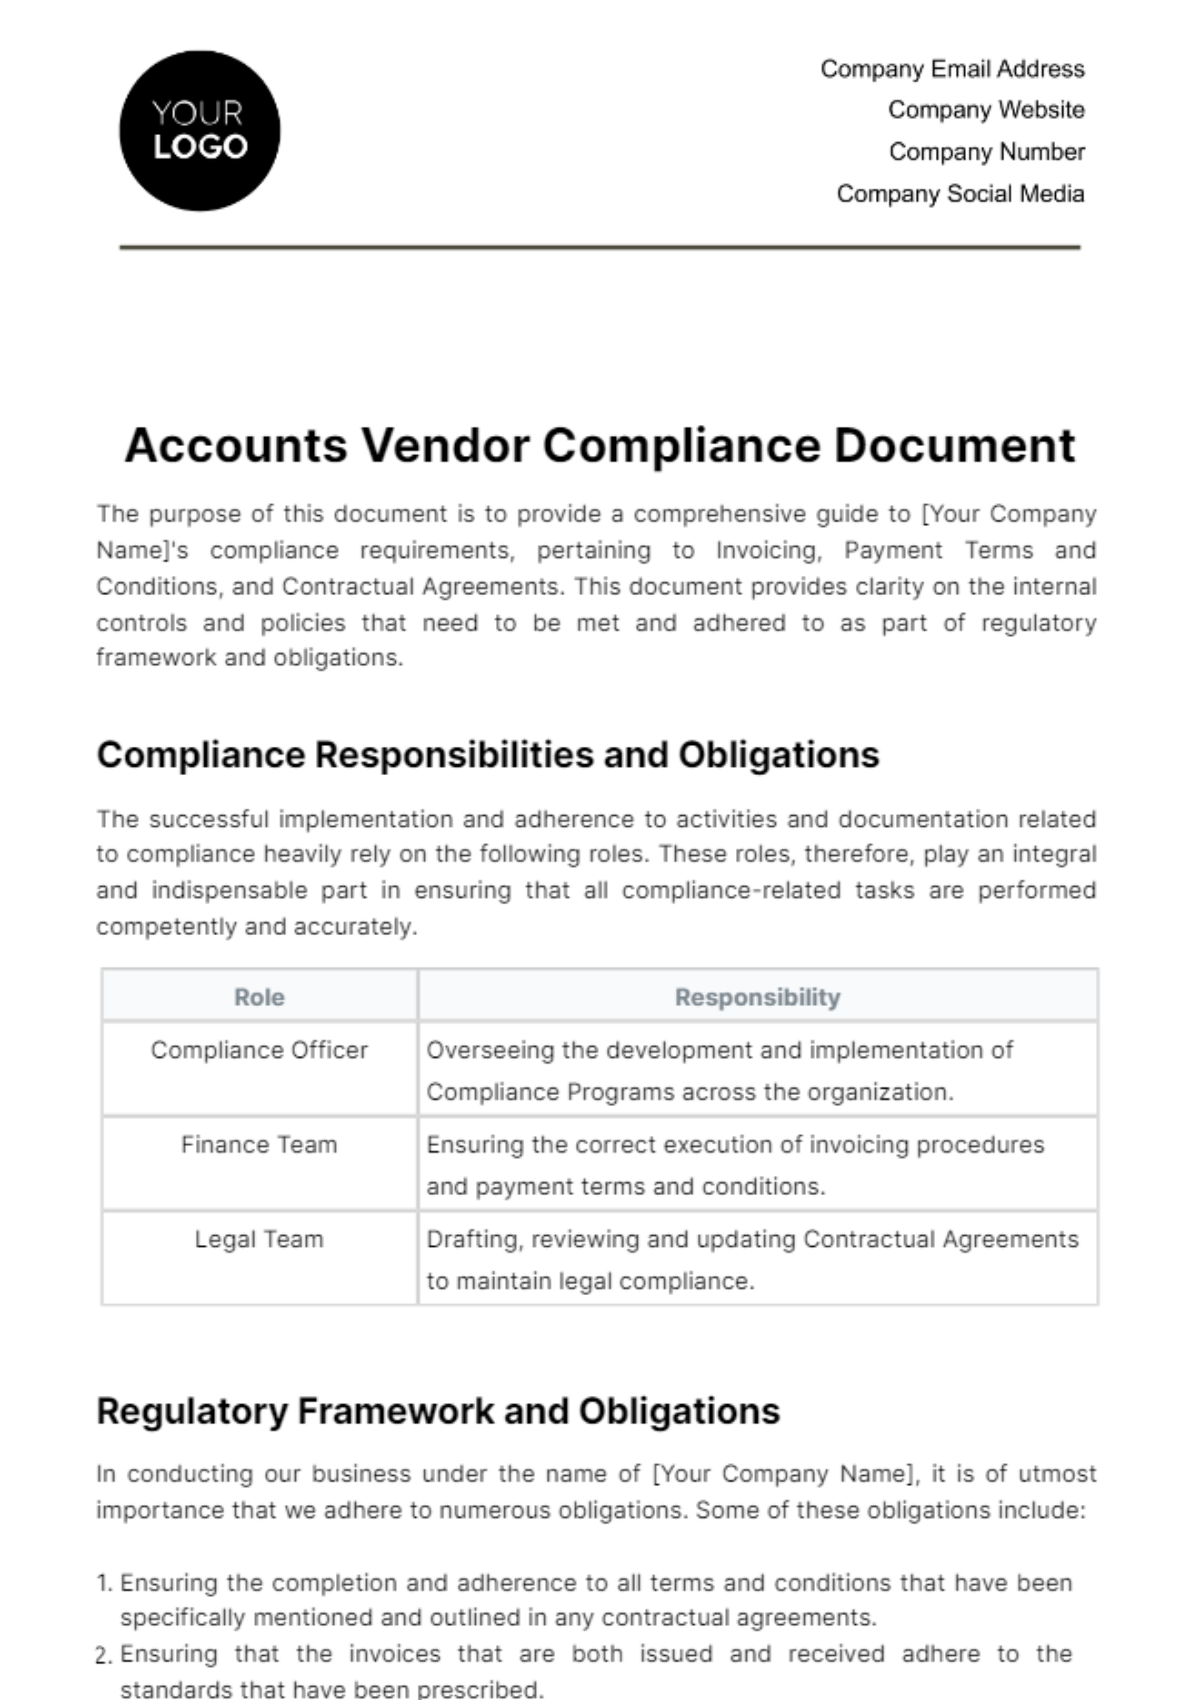 Free Accounts Vendor Compliance Document Template